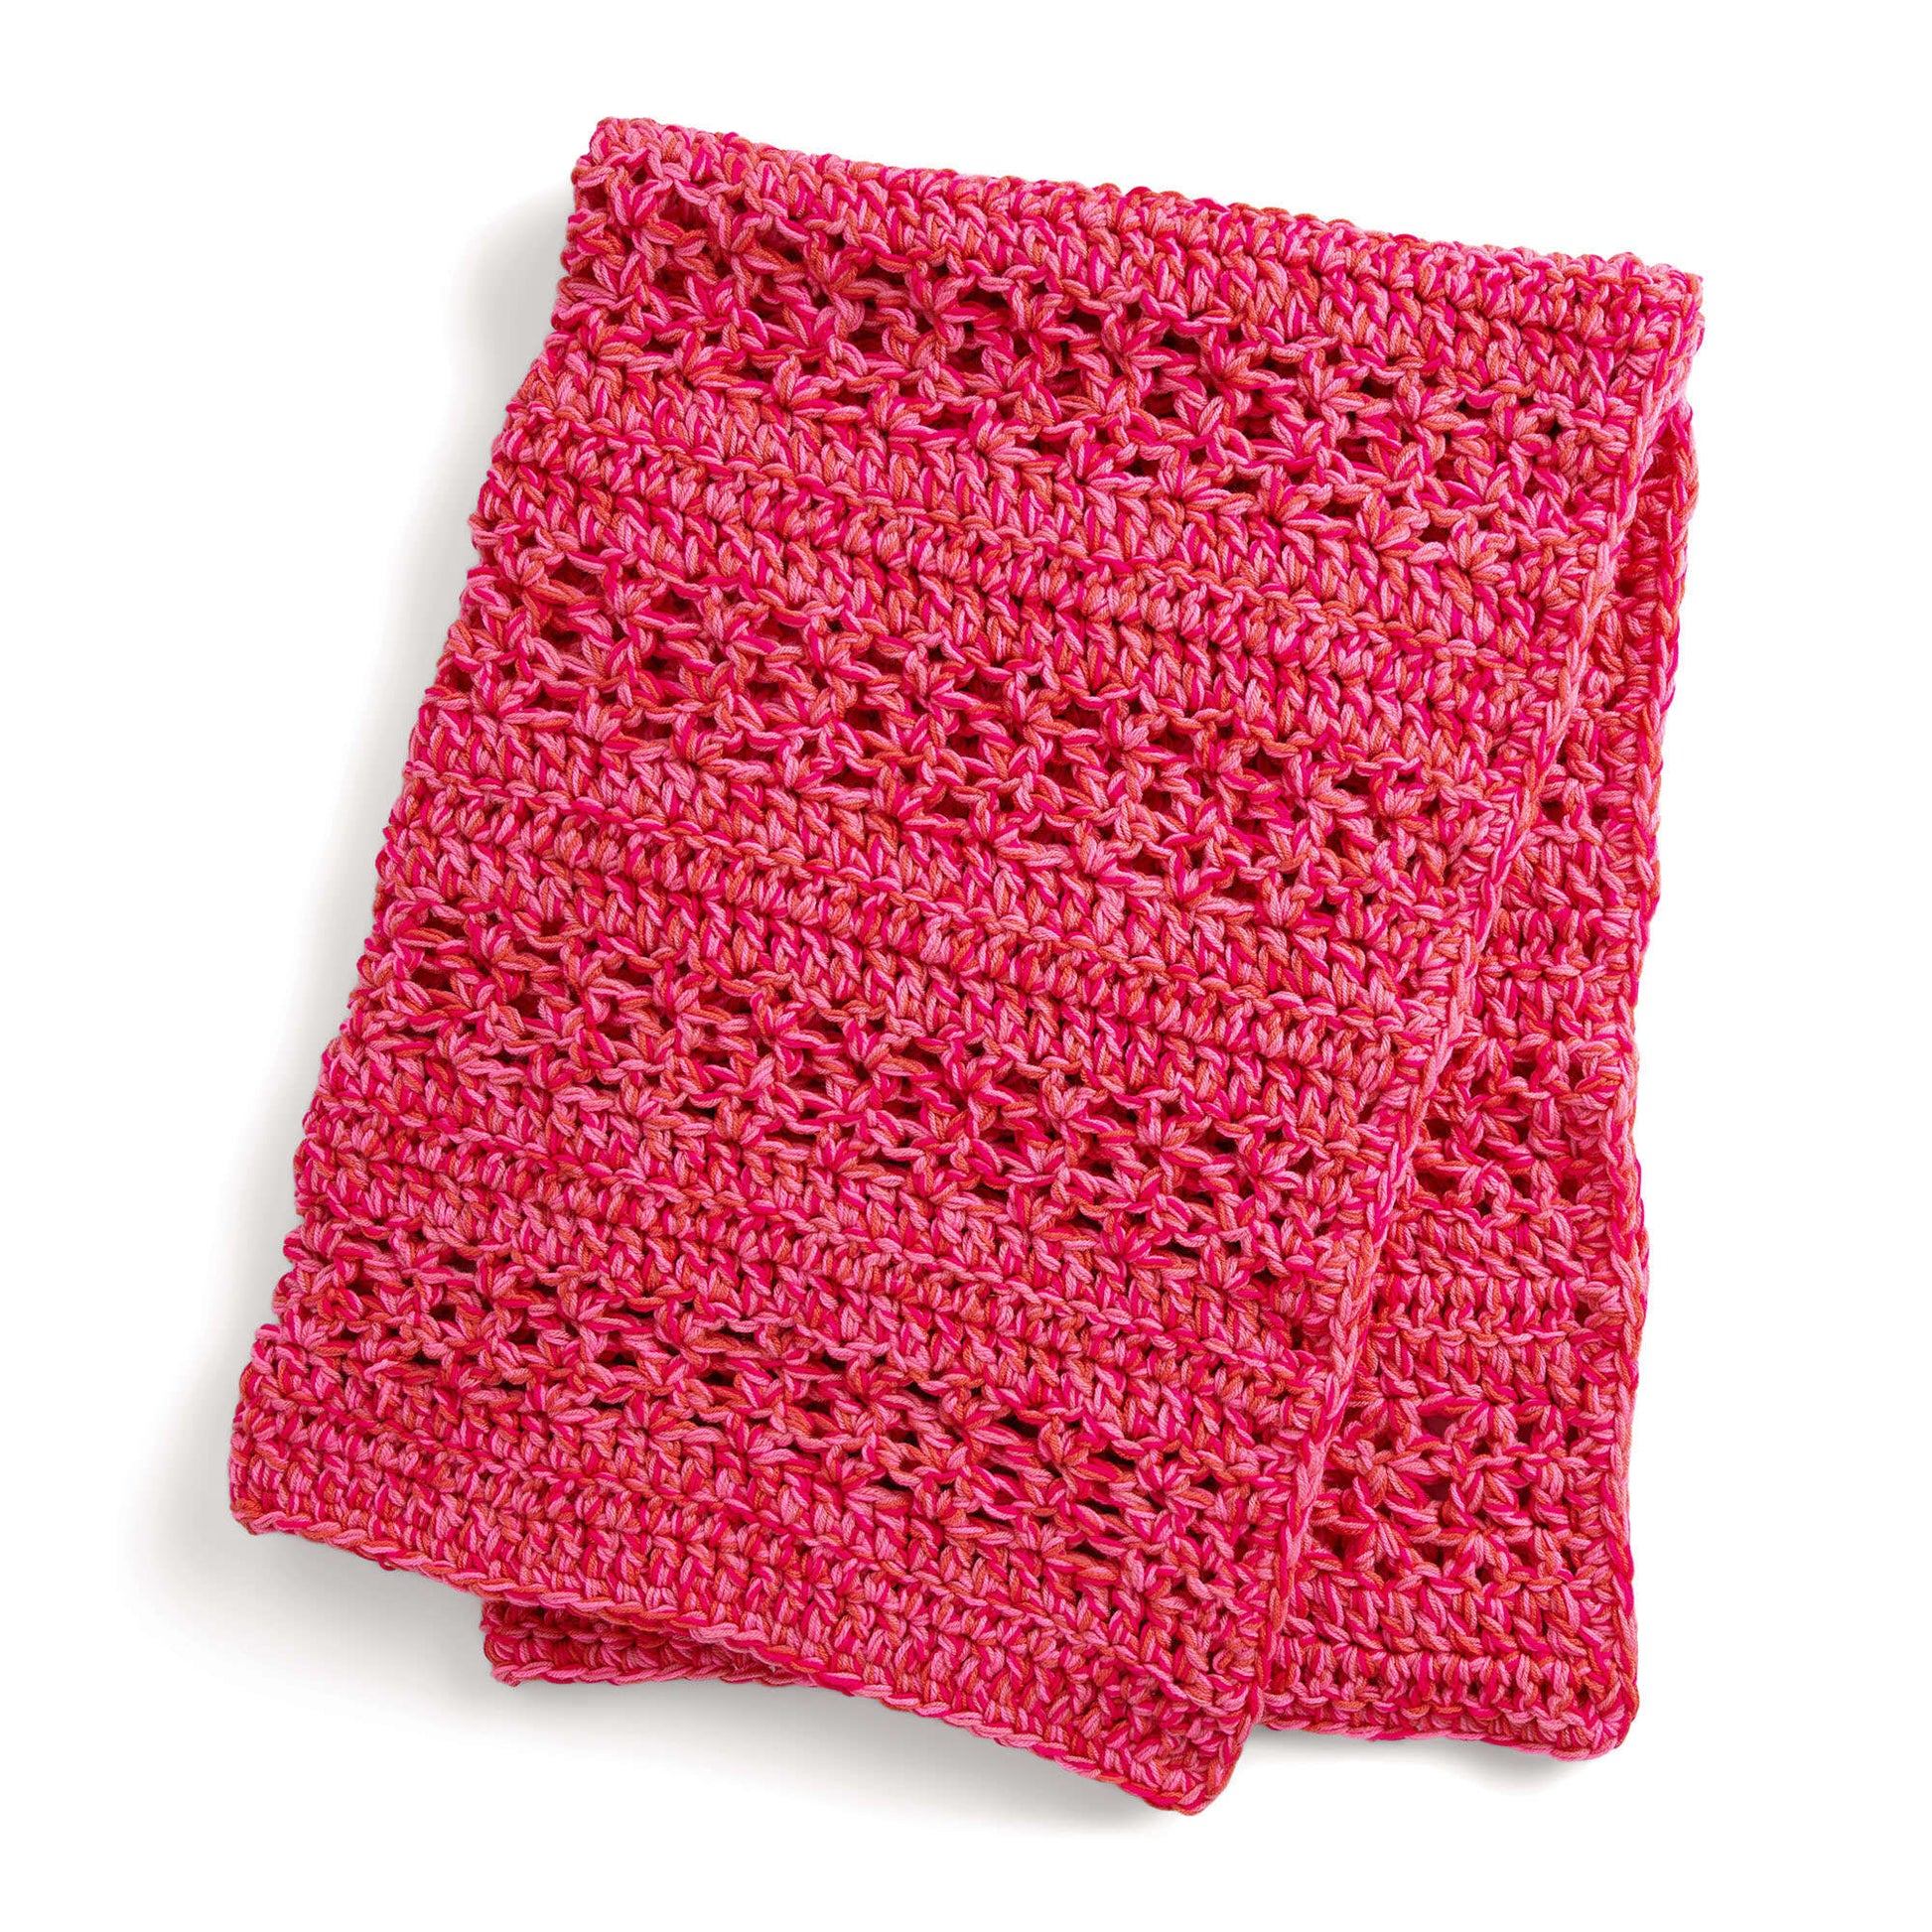 Learn Knitting Kit - Susan Bates - Beginner Knitting Kits at